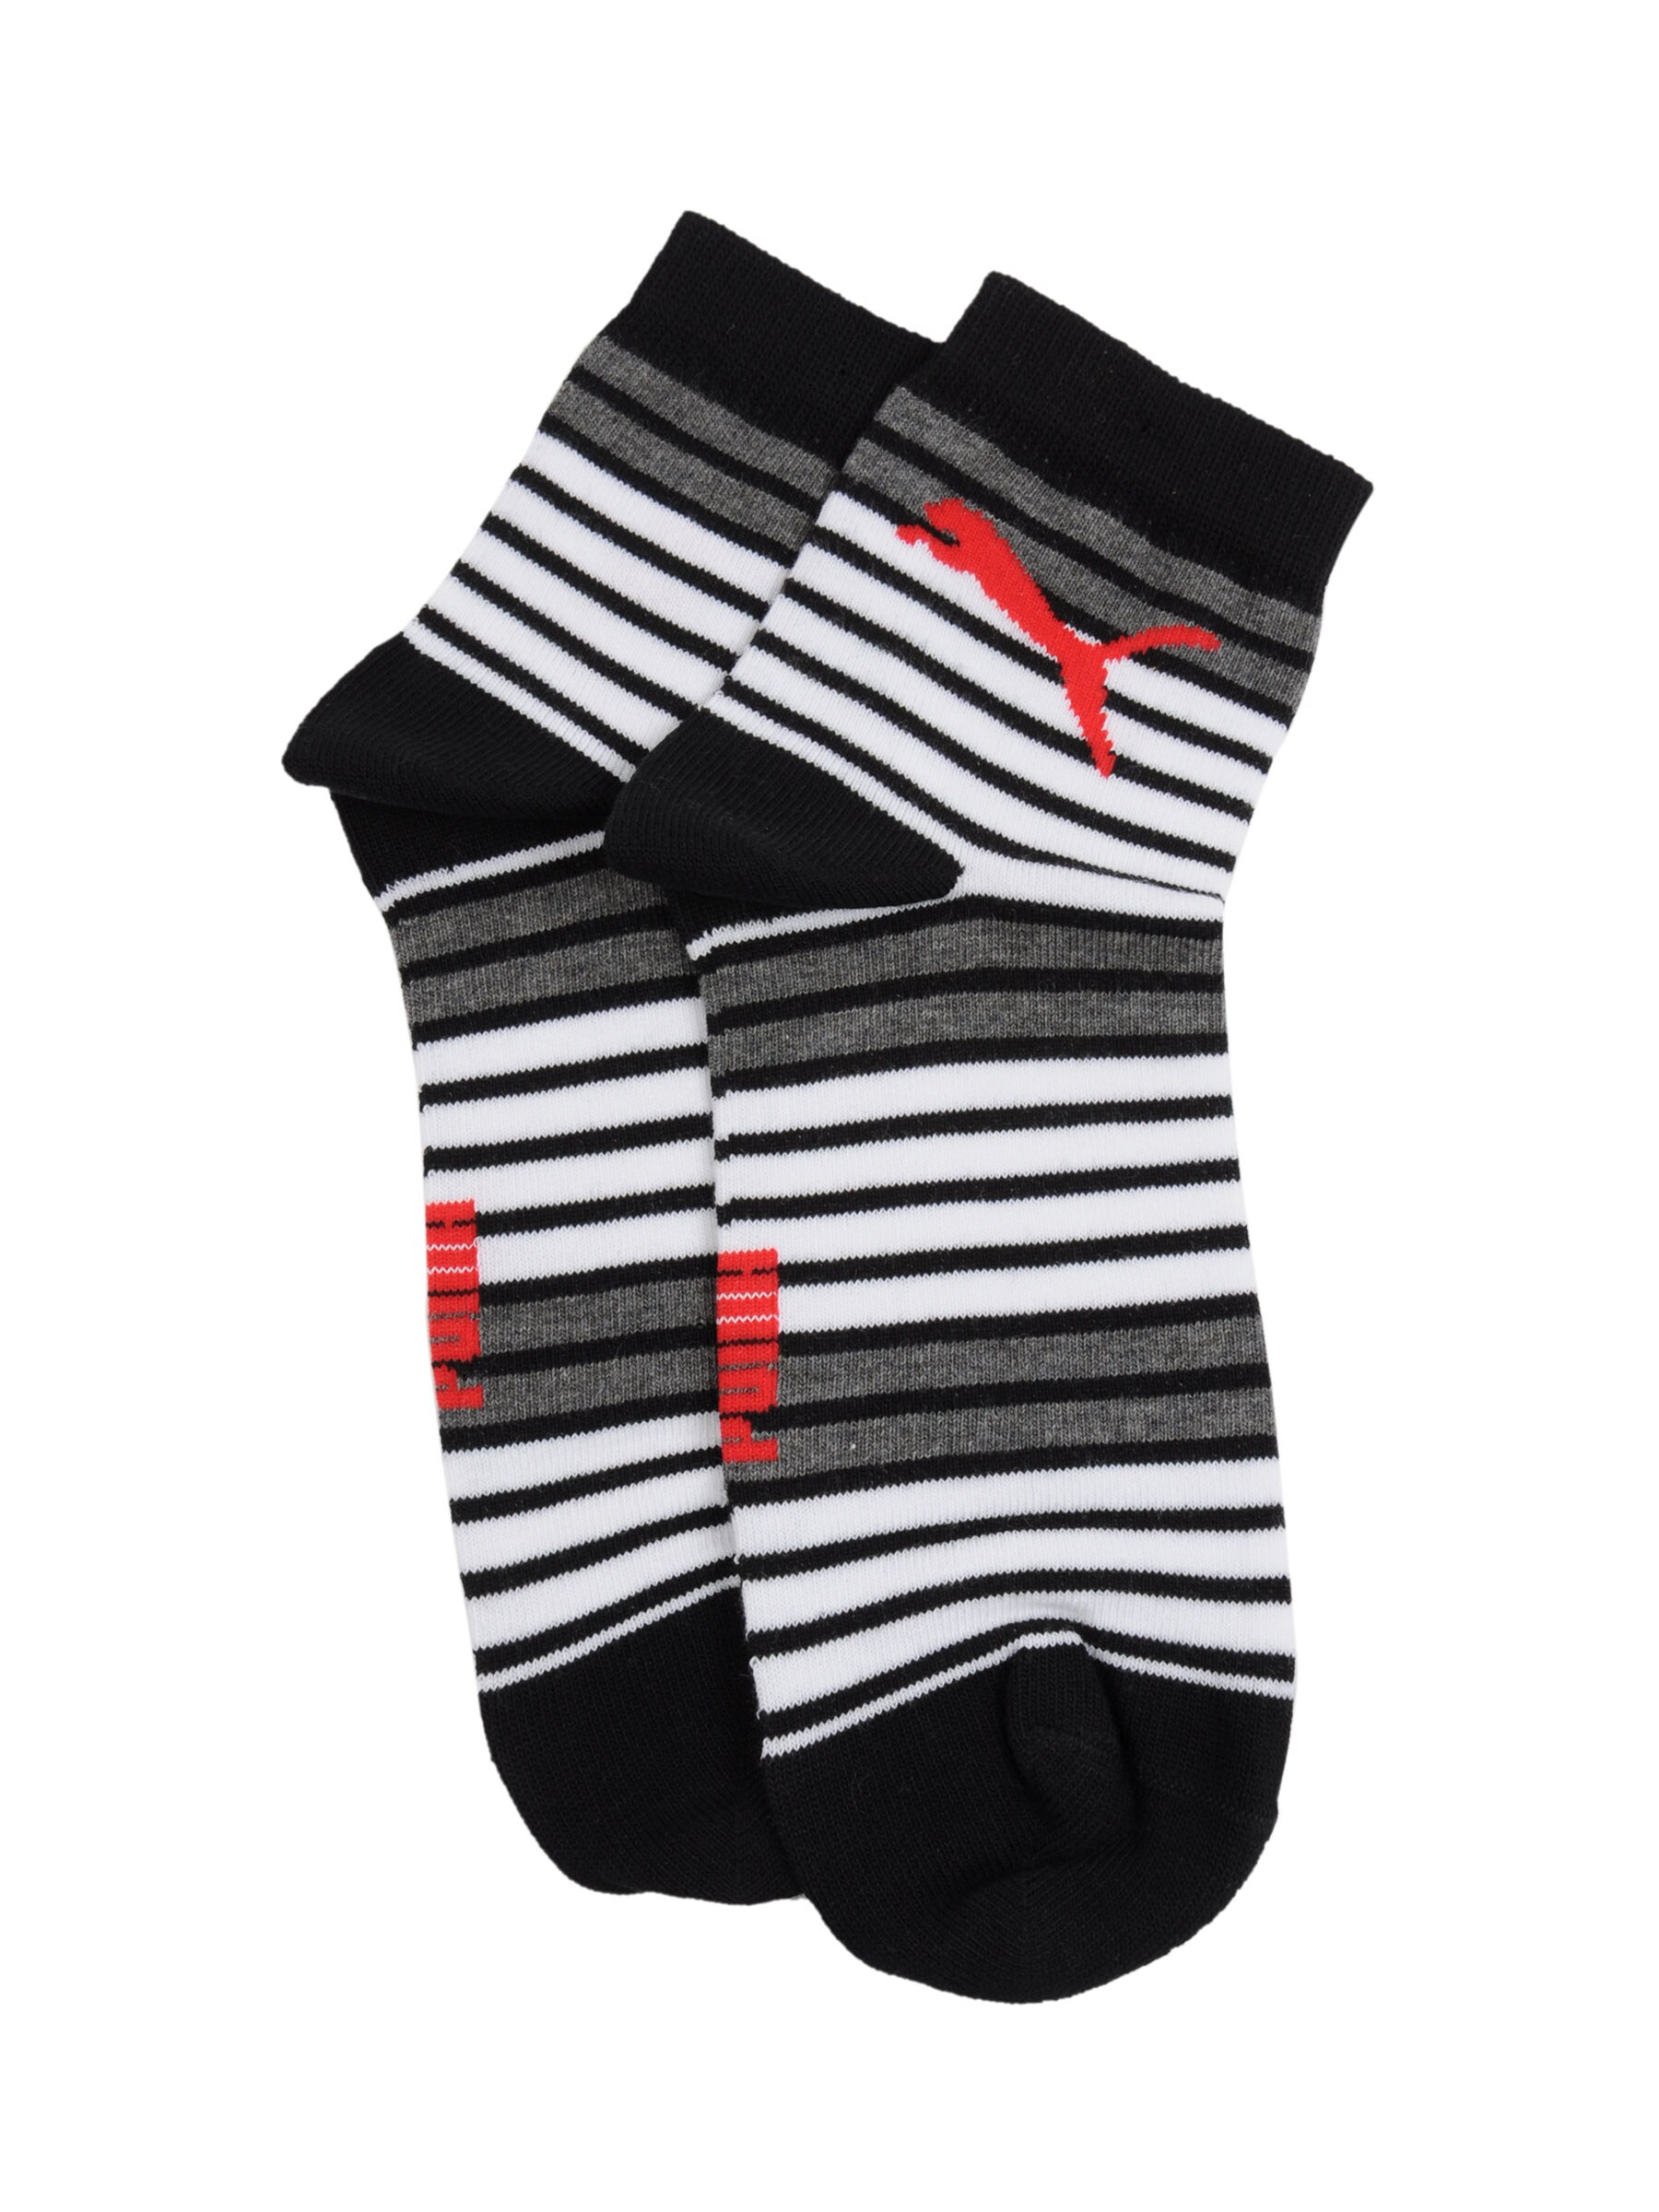 Puma Women Stripe Black Socks